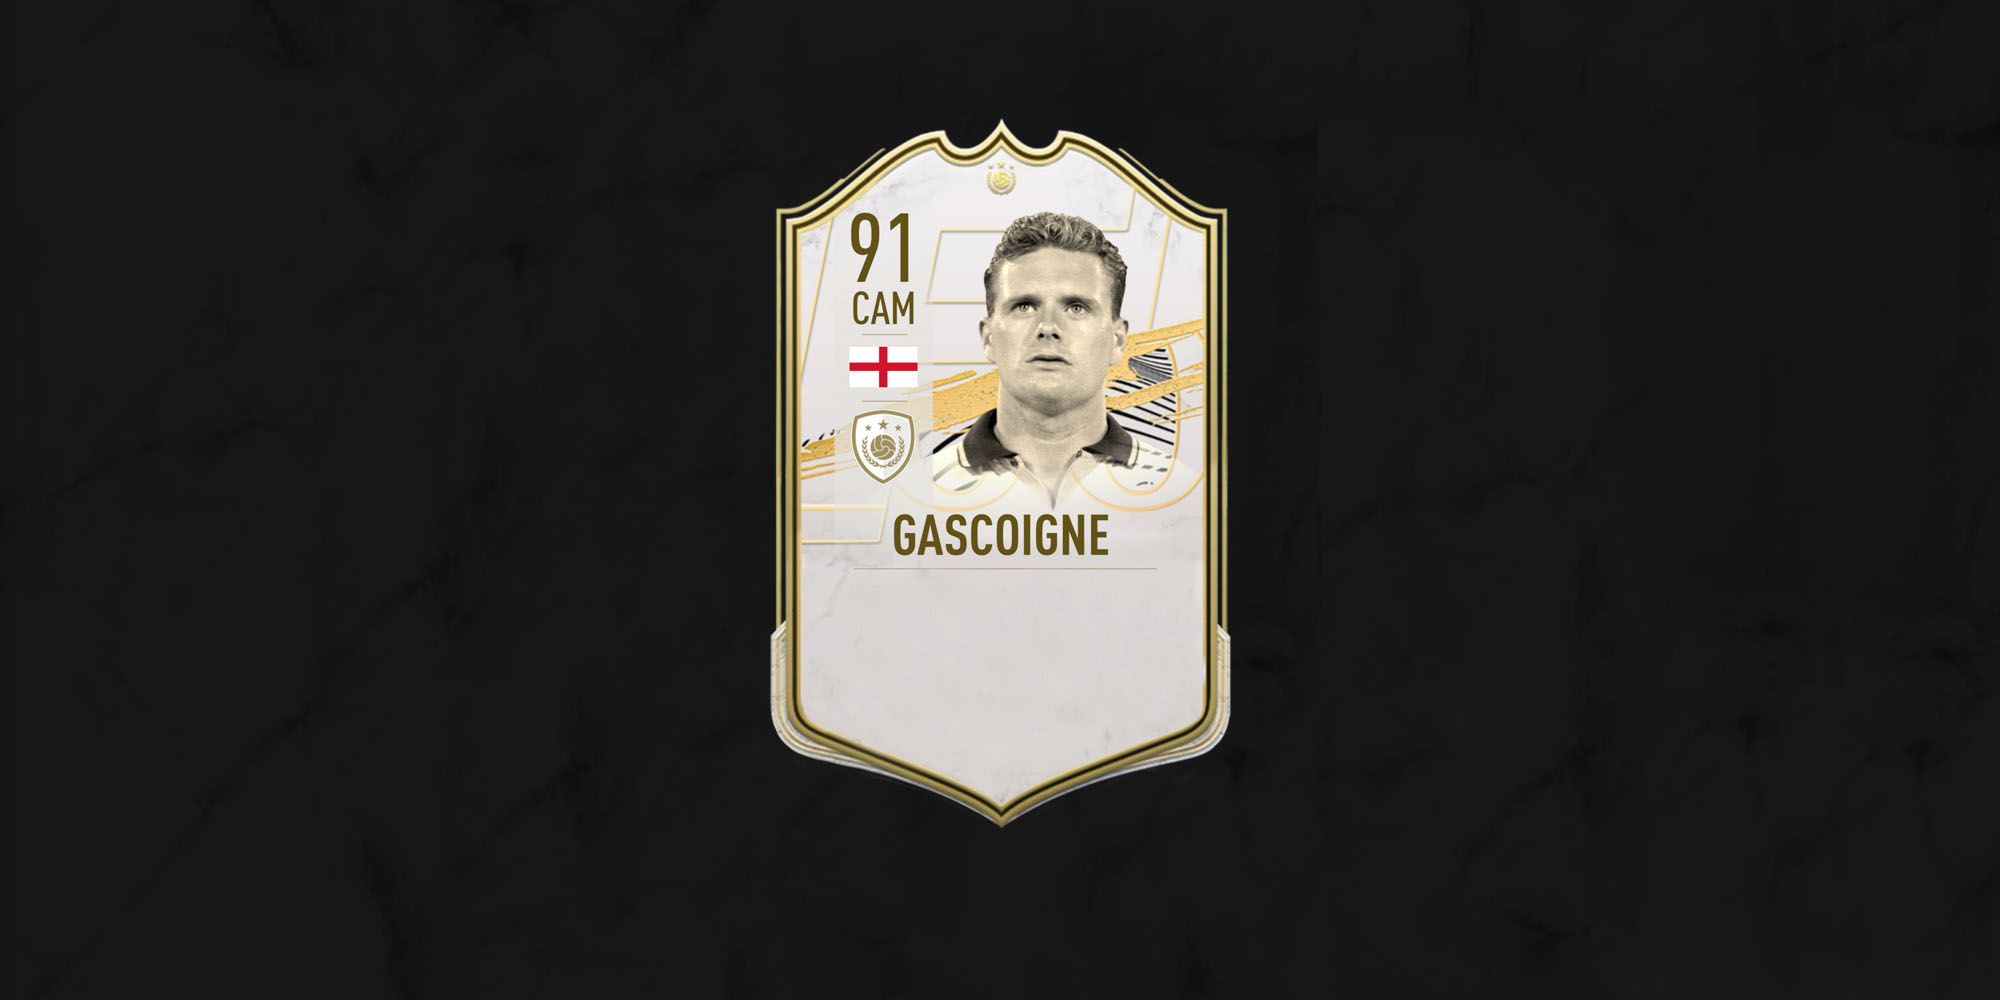 Paul Gascoigne as a future FIFA Icon